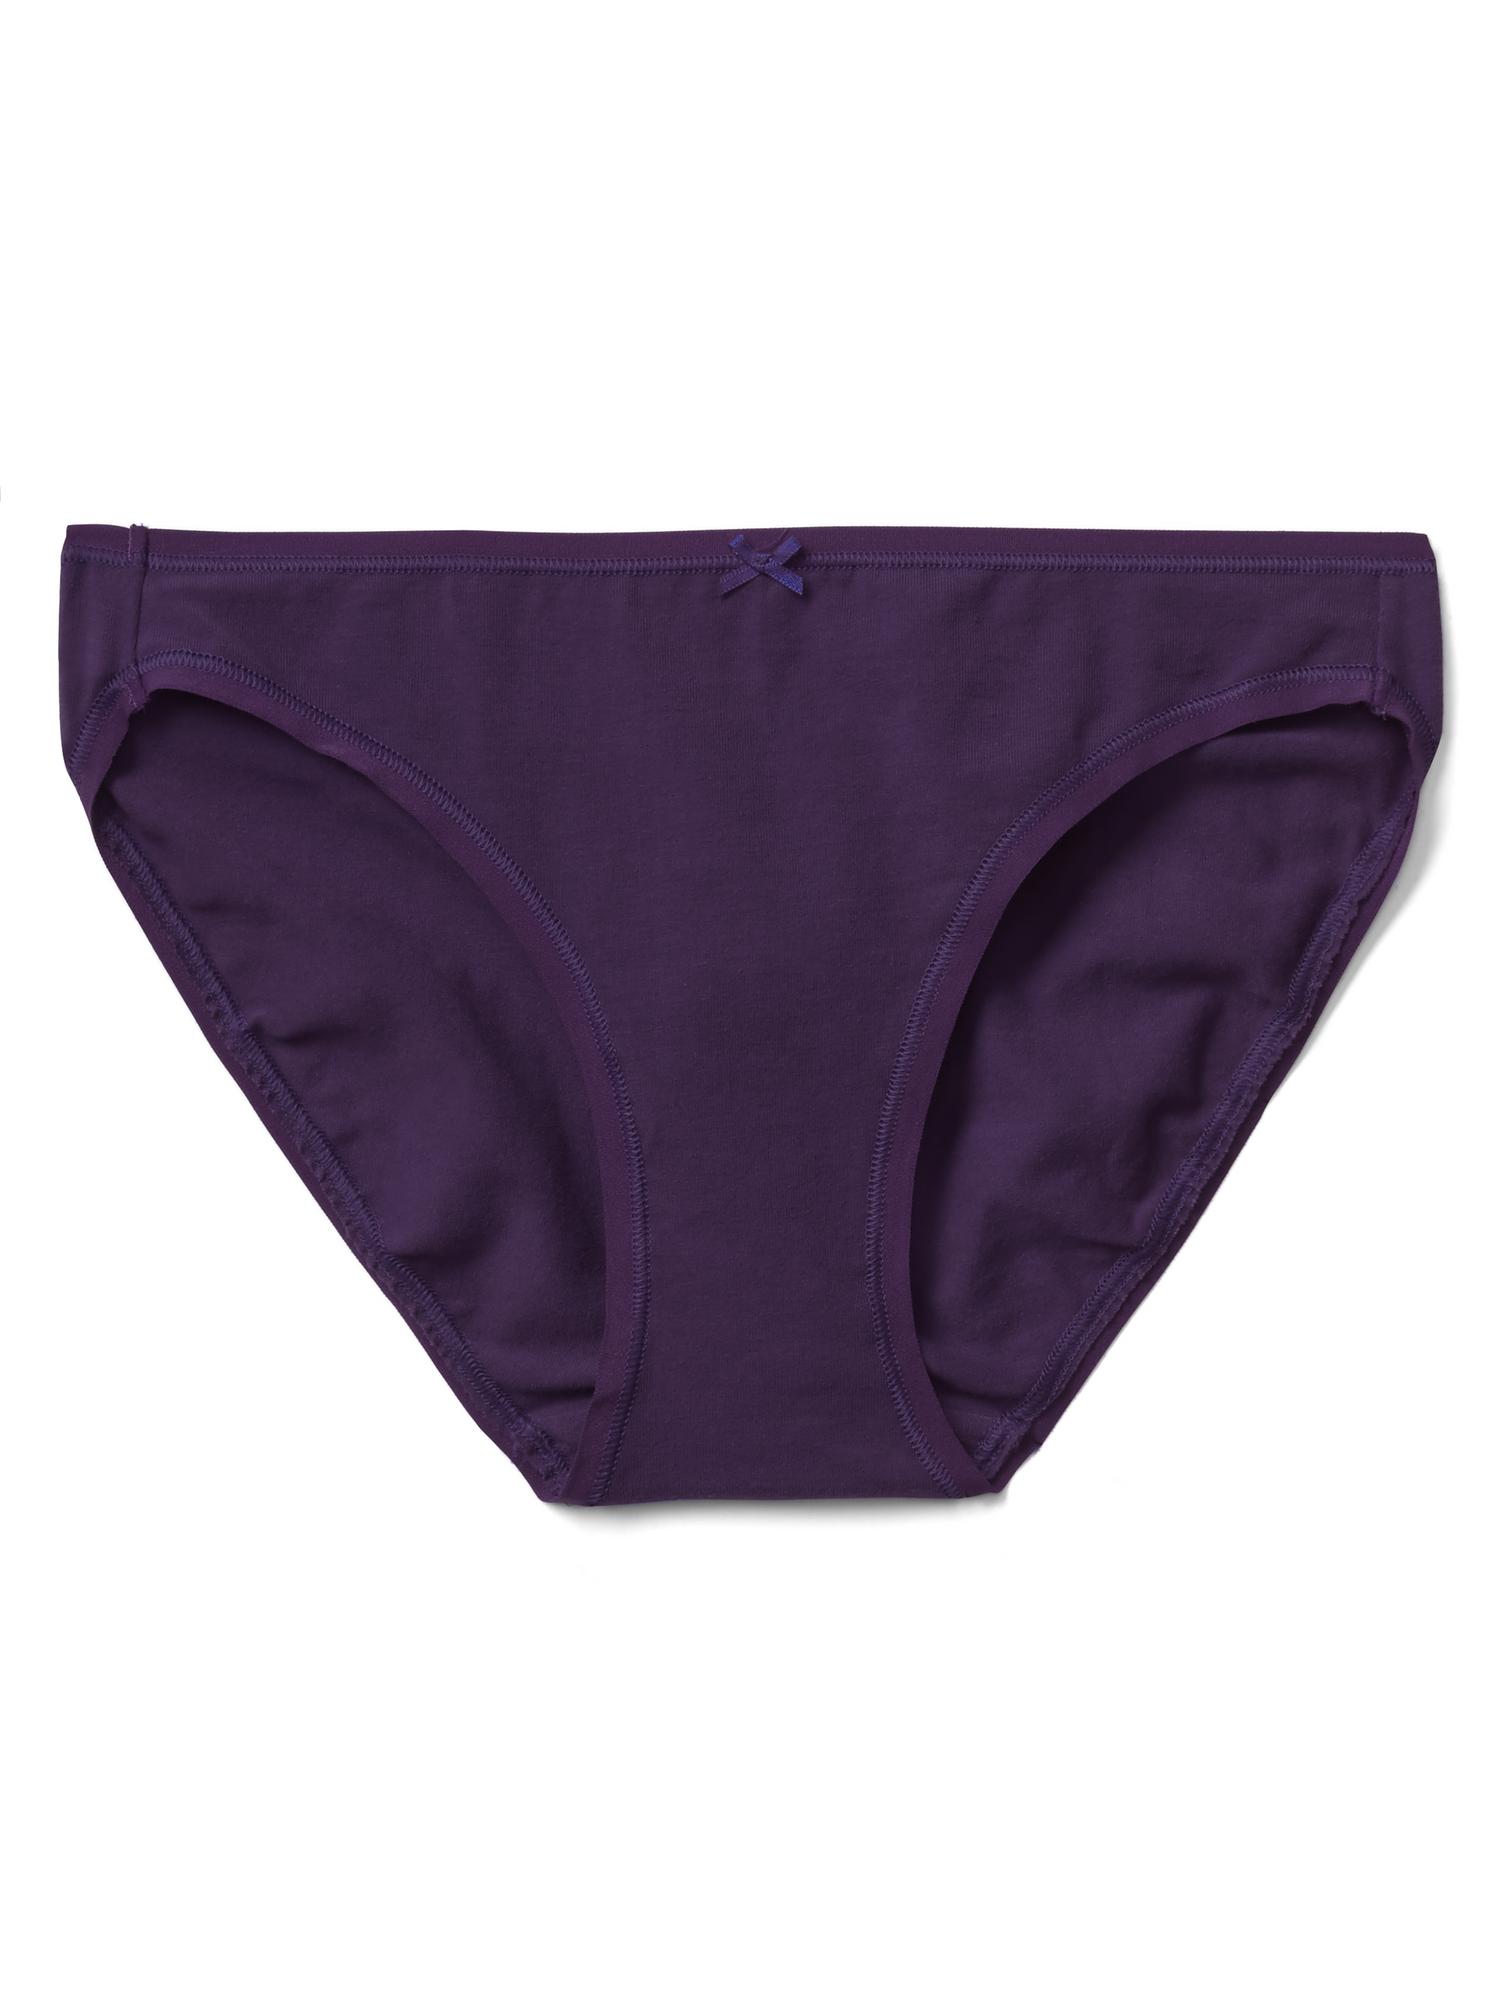 Buy Victoria's Secret Icy Lavender Purple Stretch Cotton Highleg